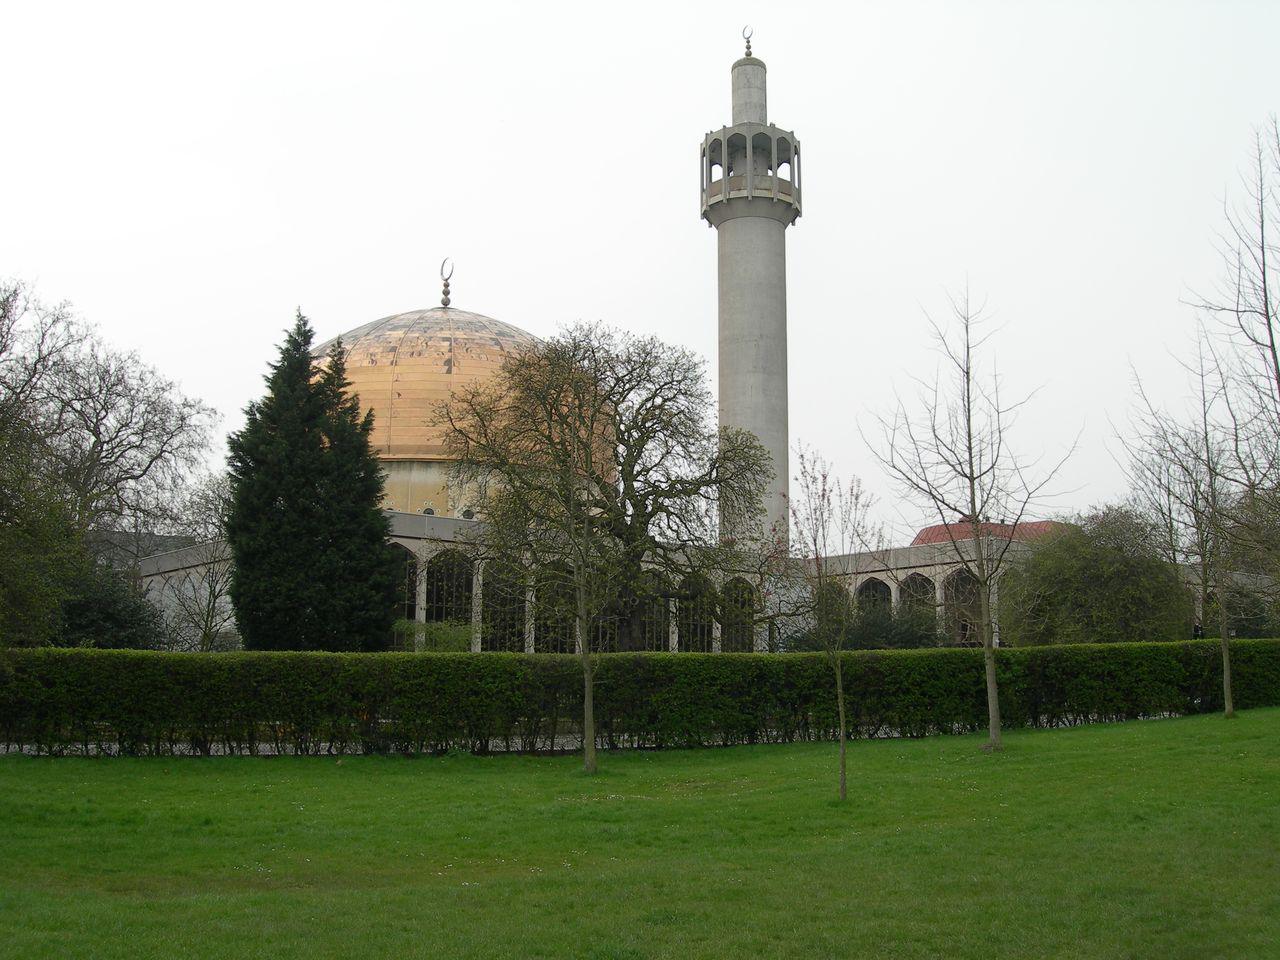 Regent's Park Mosque